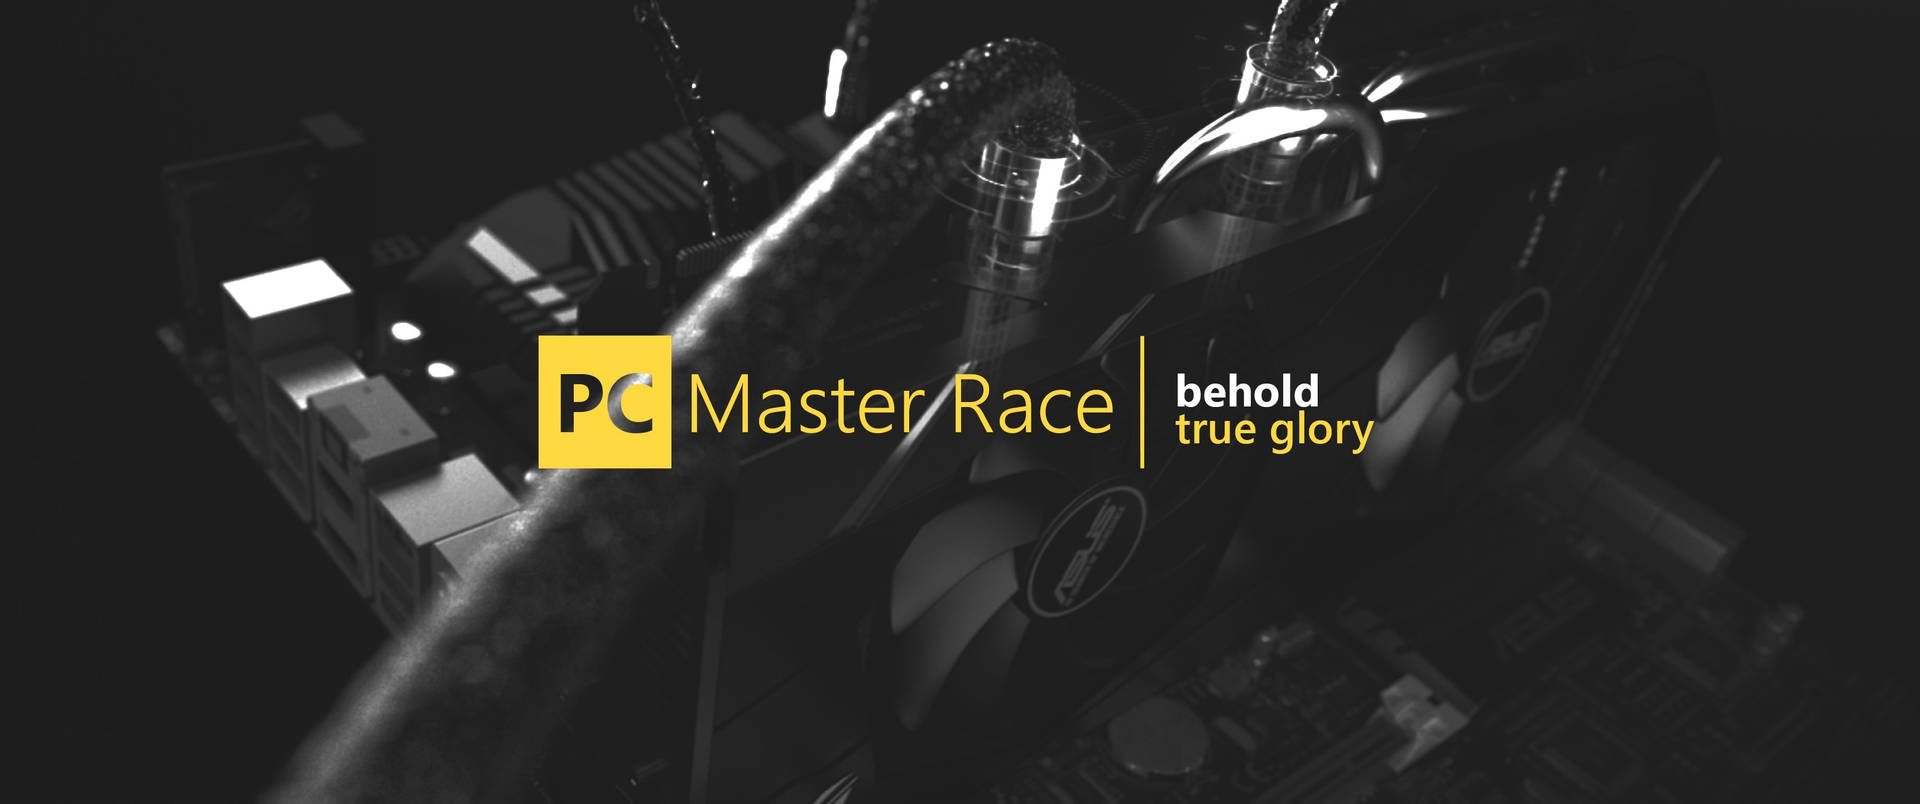 PC Master Race Computer Processor Wallpaper